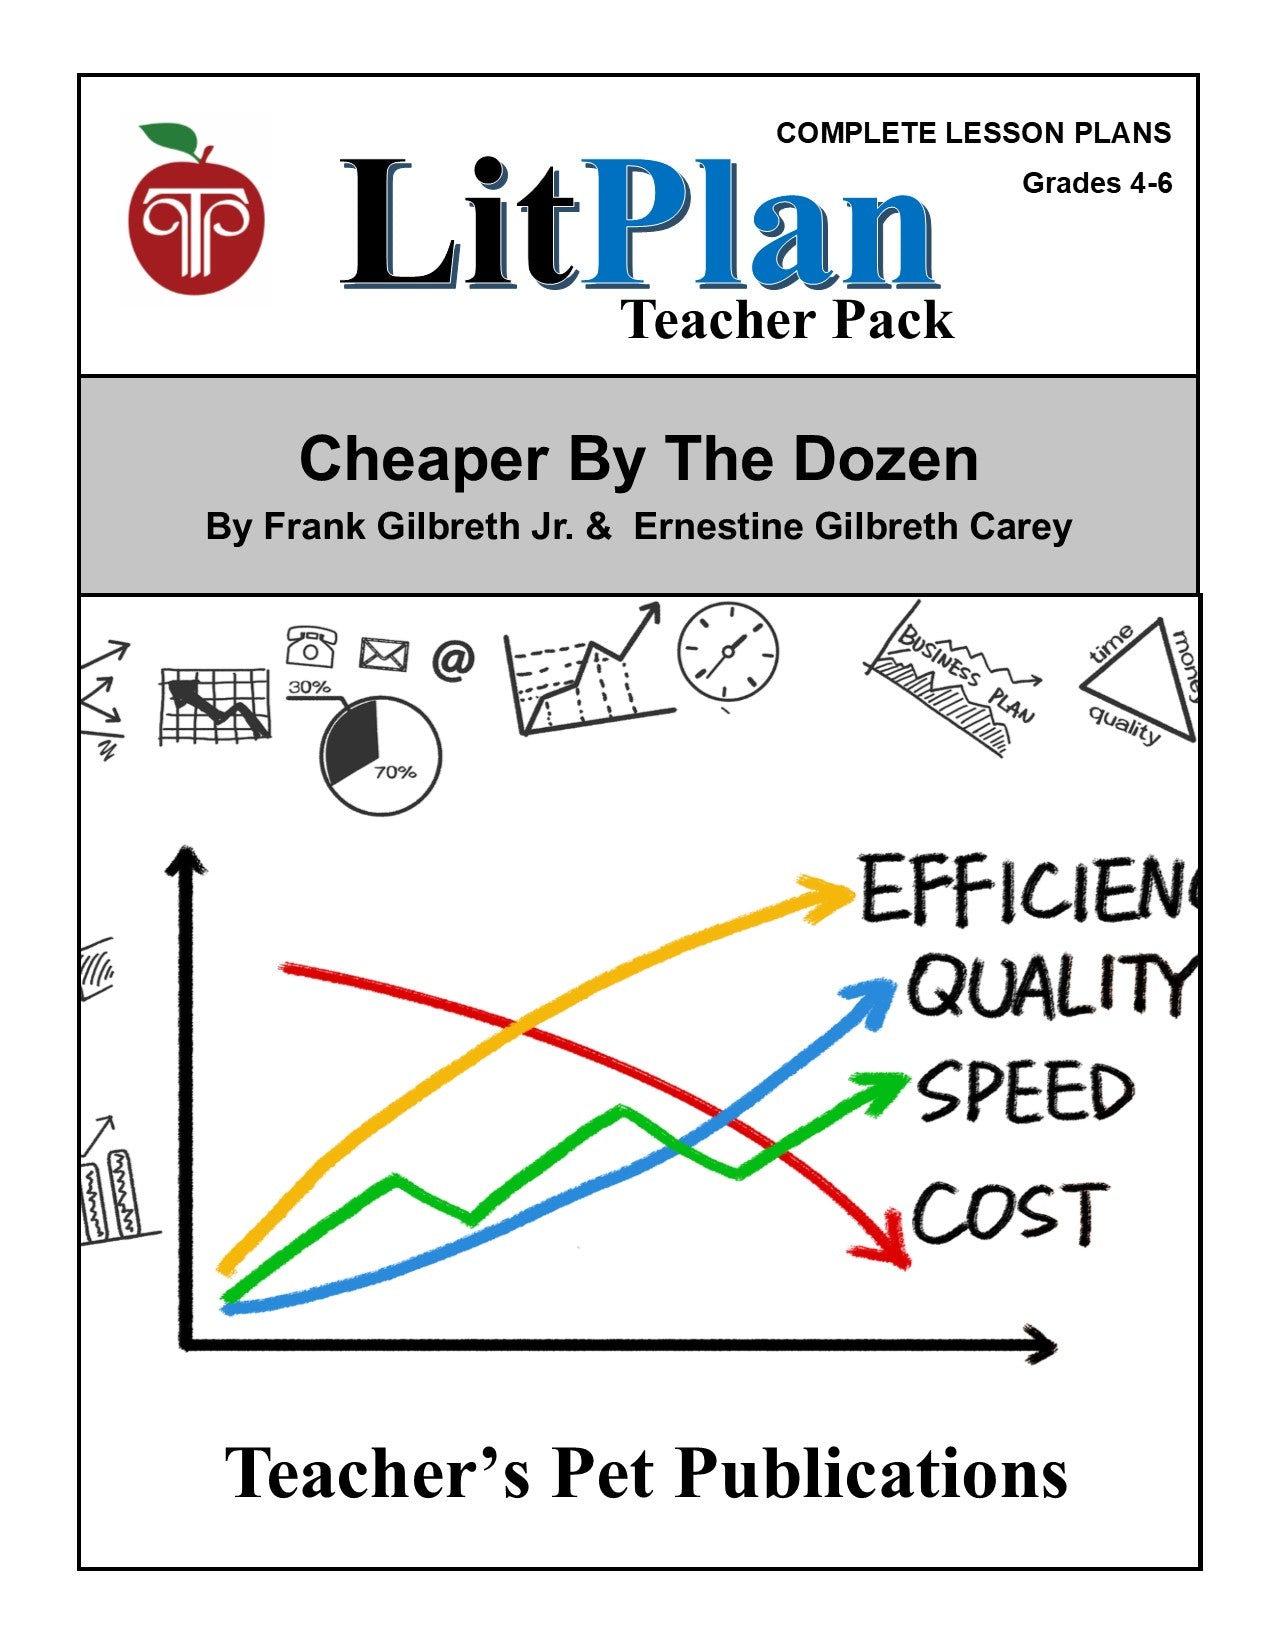 Cheaper By The Dozen: LitPlan Teacher Pack Grades 4-6